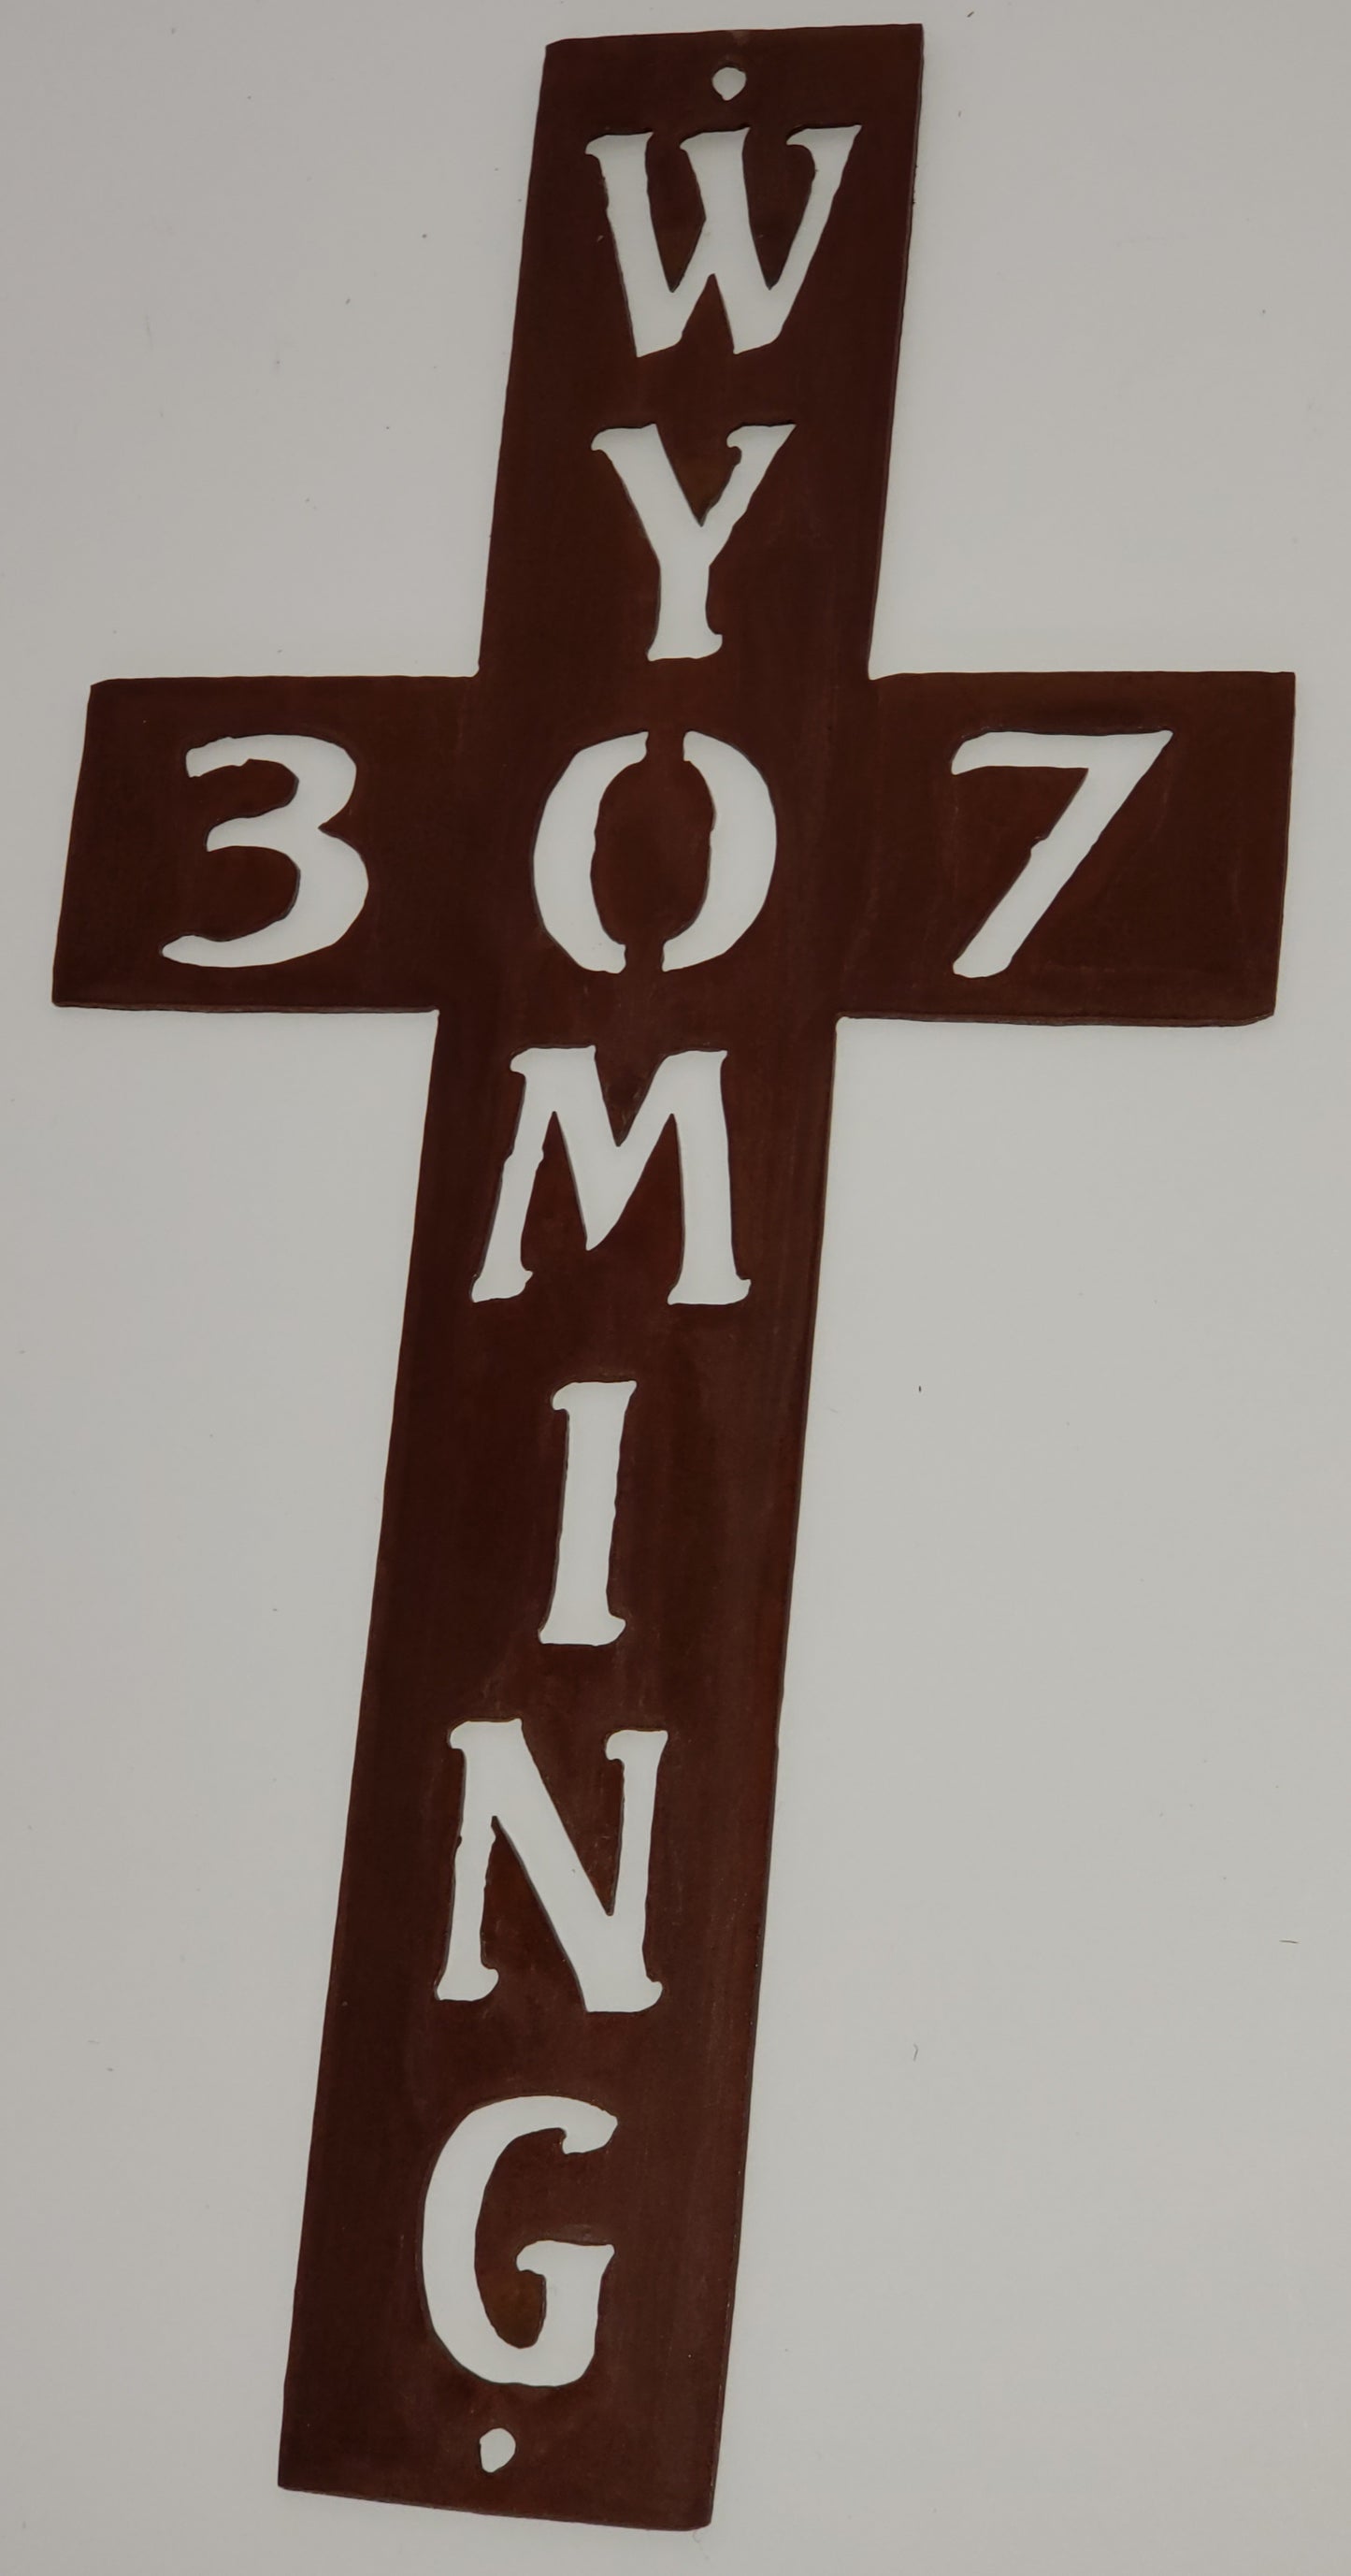 Large Metal Cross " Wyoming 307 "